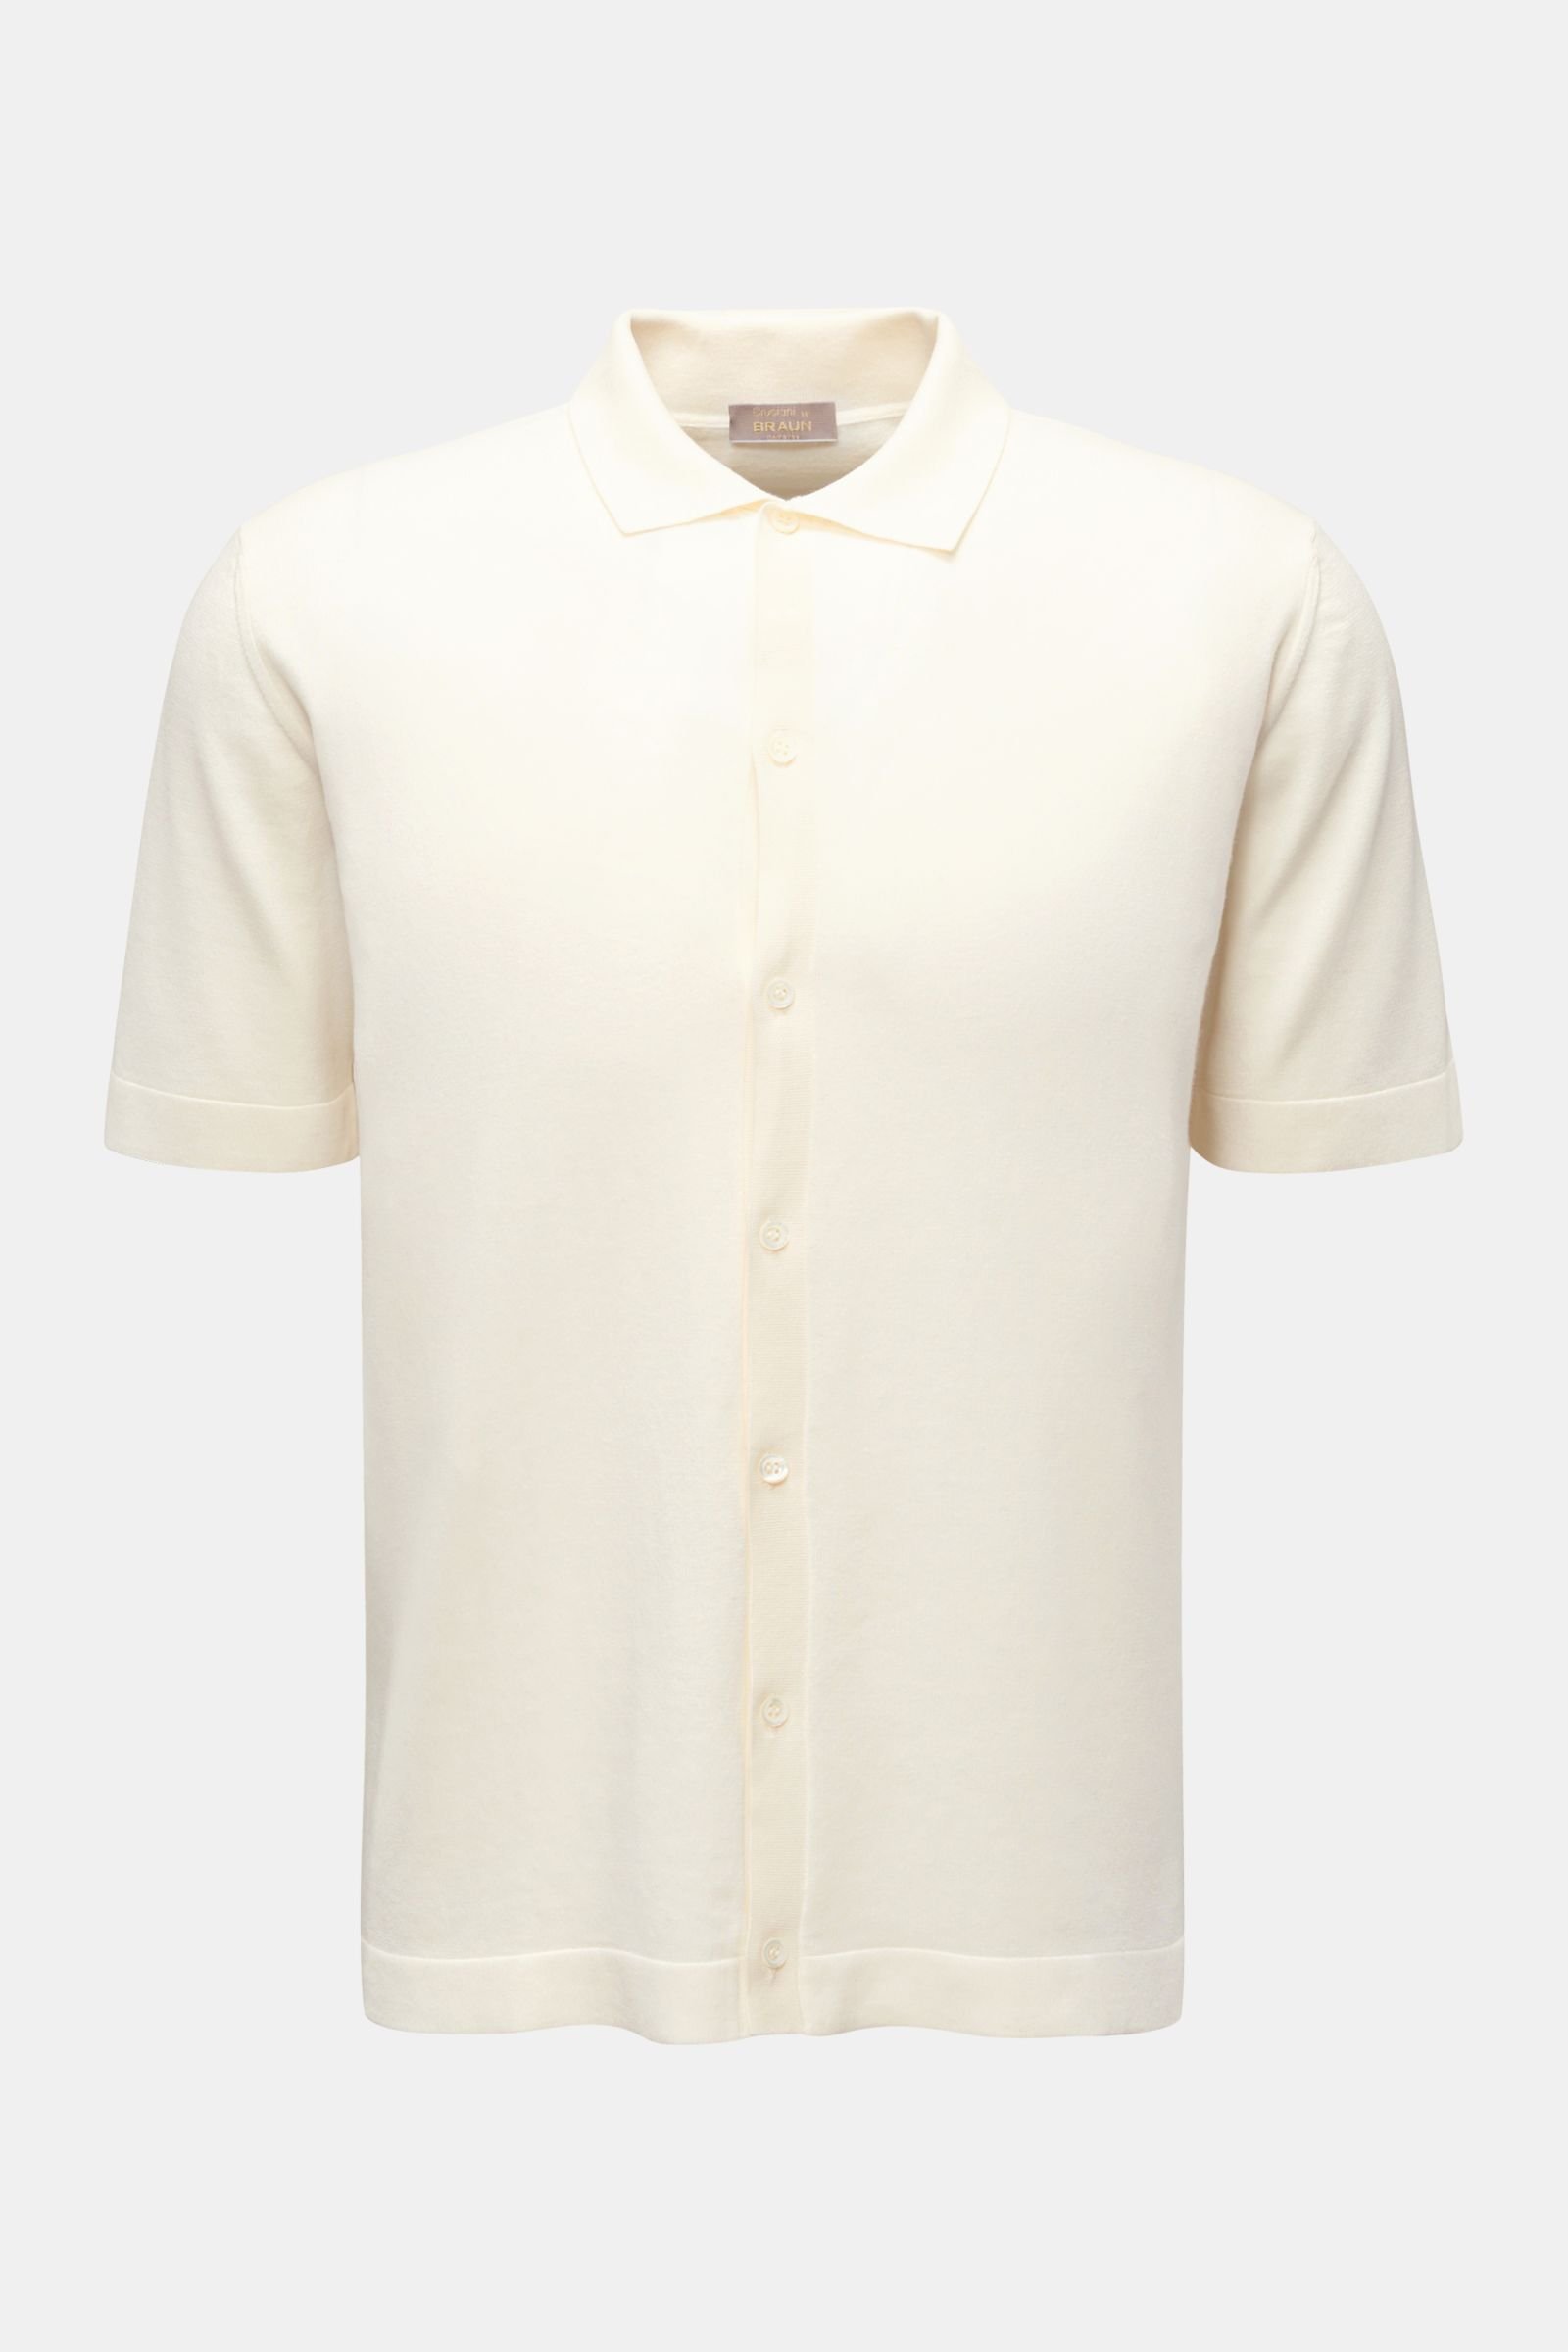 Short sleeve knit shirt narrow collar cream